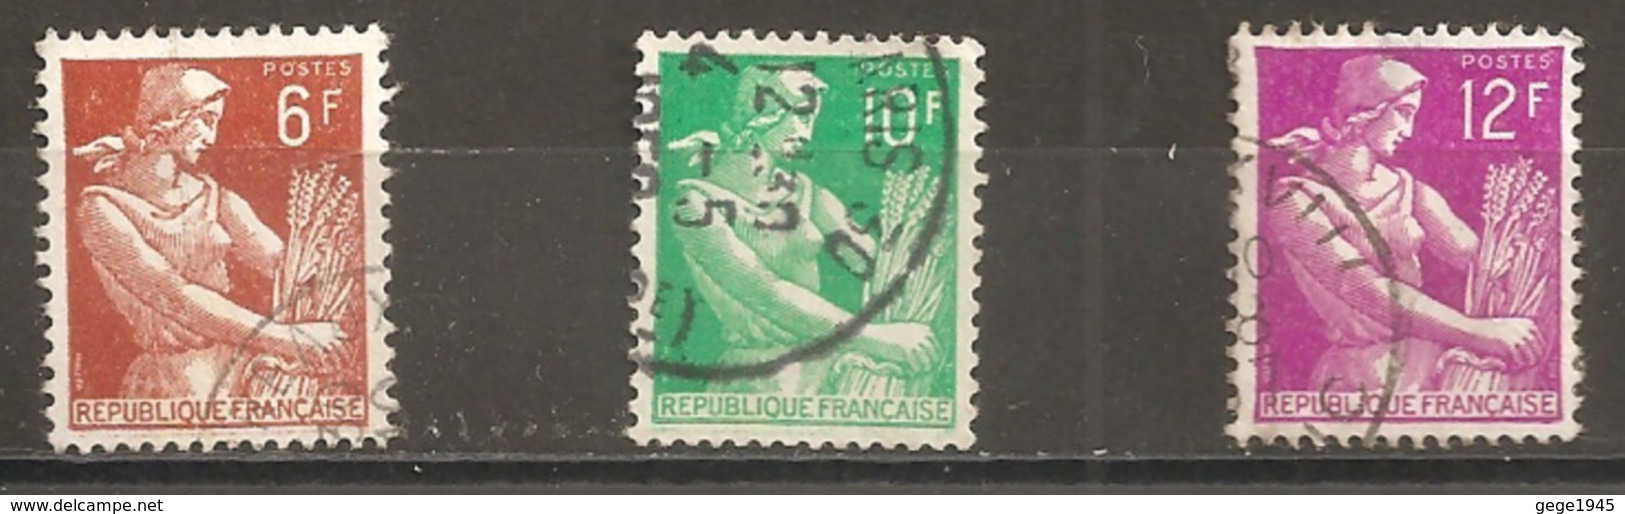 France 1957  Oblitéré   N° 1115  - 1115A  - 1116   -  Type Moissonneuse - 1957-1959 Moissonneuse